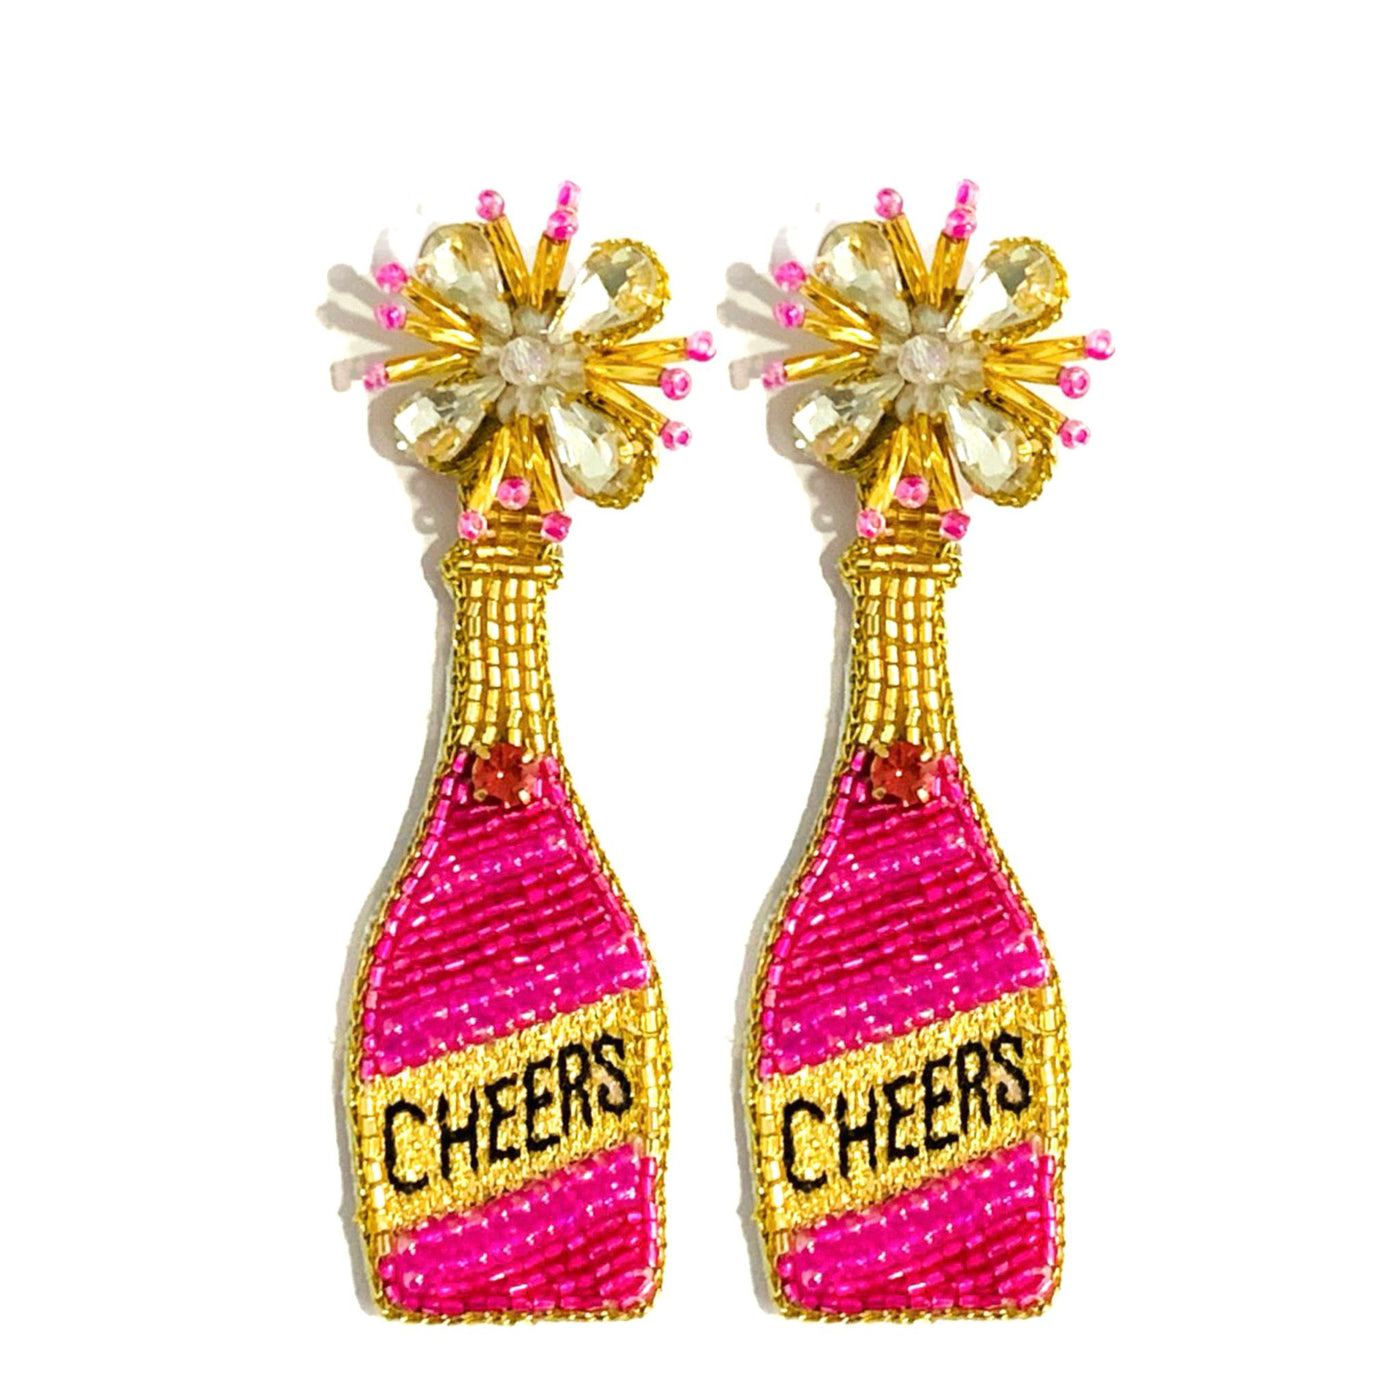 Cheers Champagne Bottle Earrings